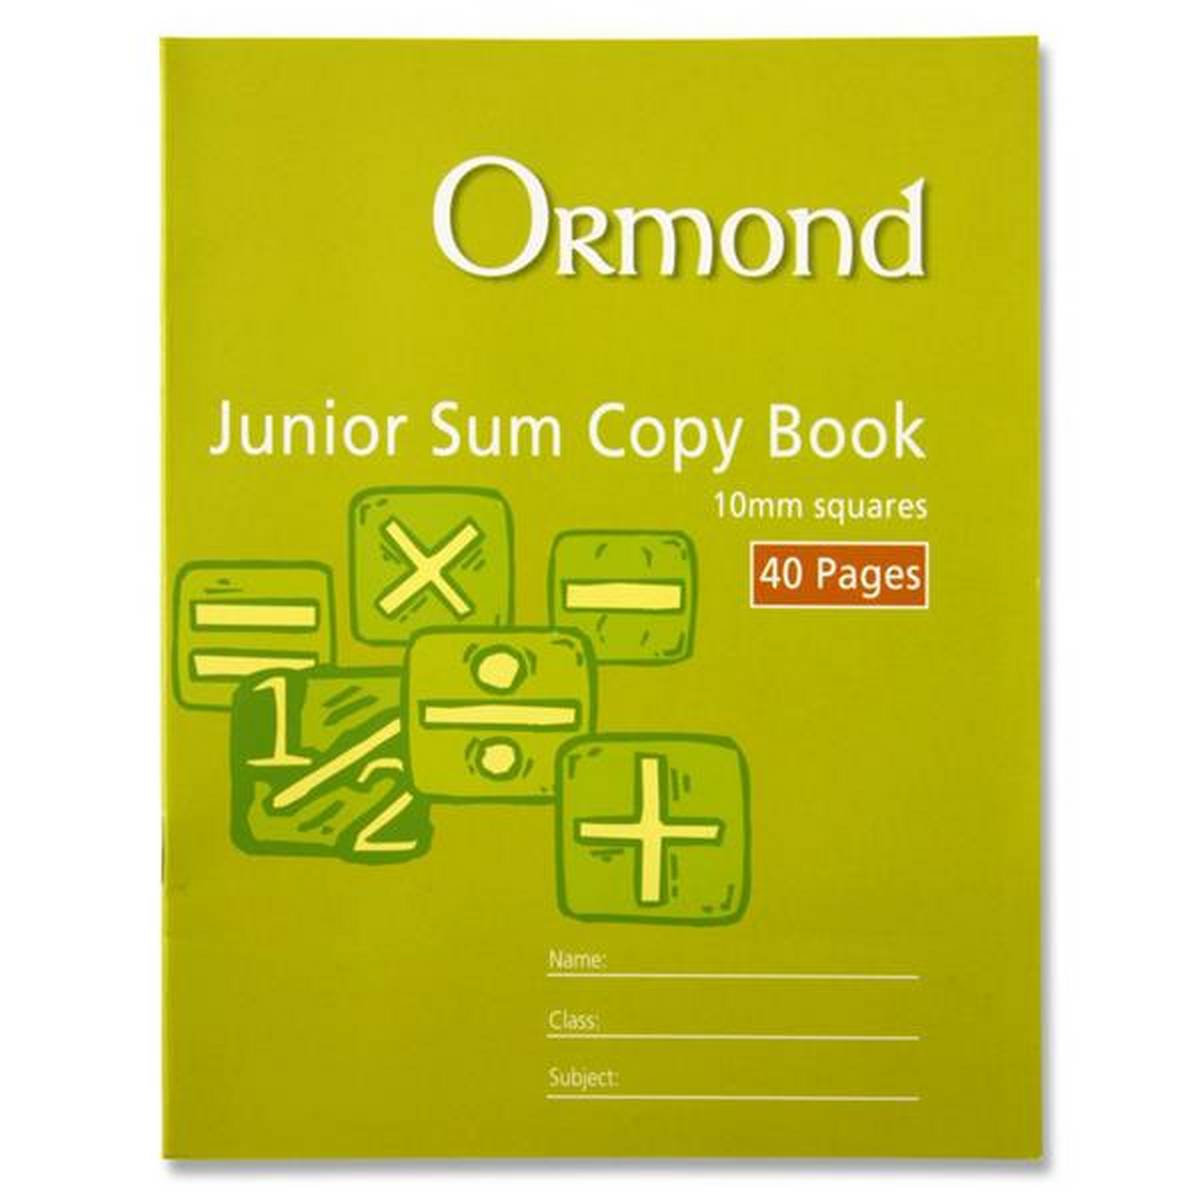 Ormond 10mm Sq 40 Page Junior Sum Copy